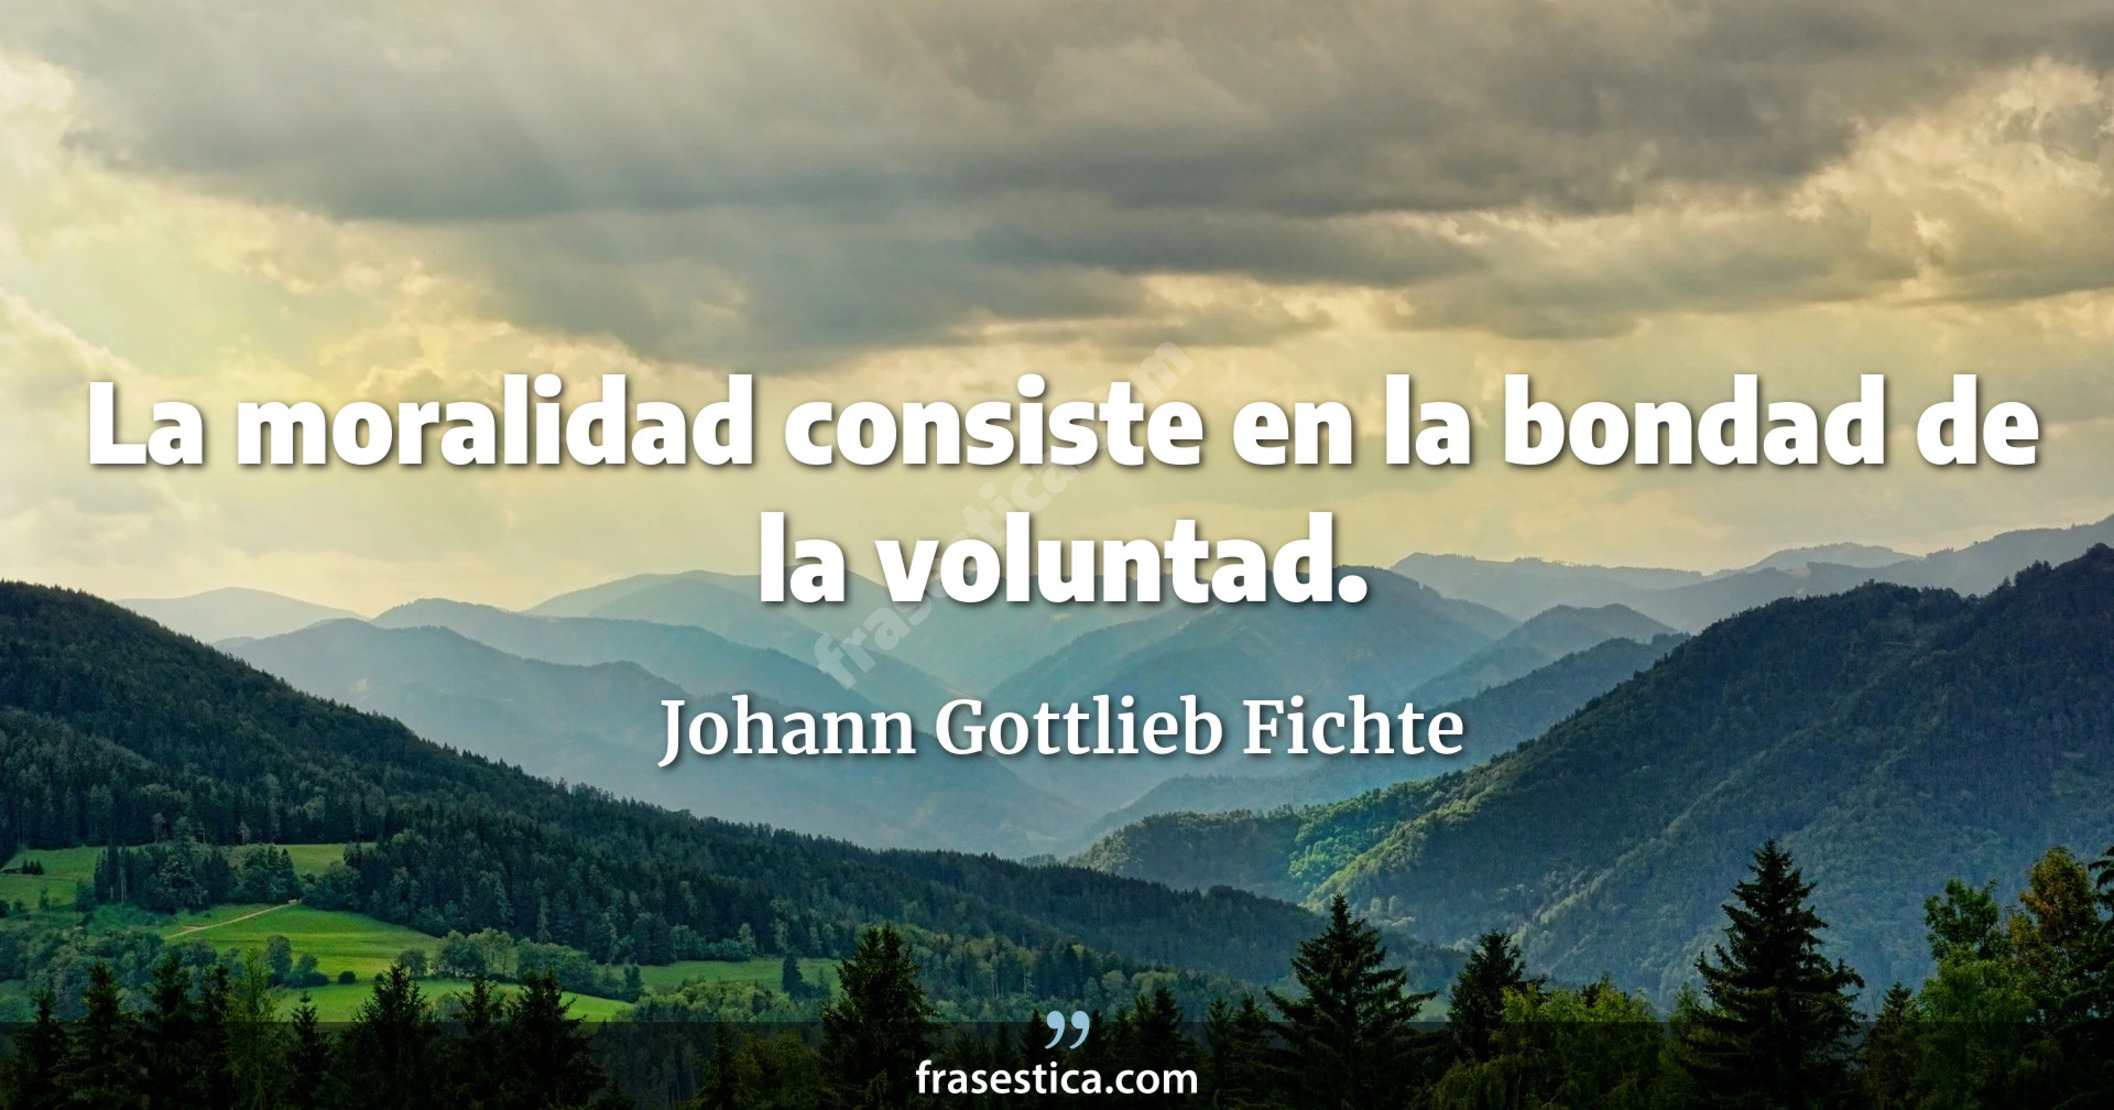 La moralidad consiste en la bondad de la voluntad. - Johann Gottlieb Fichte